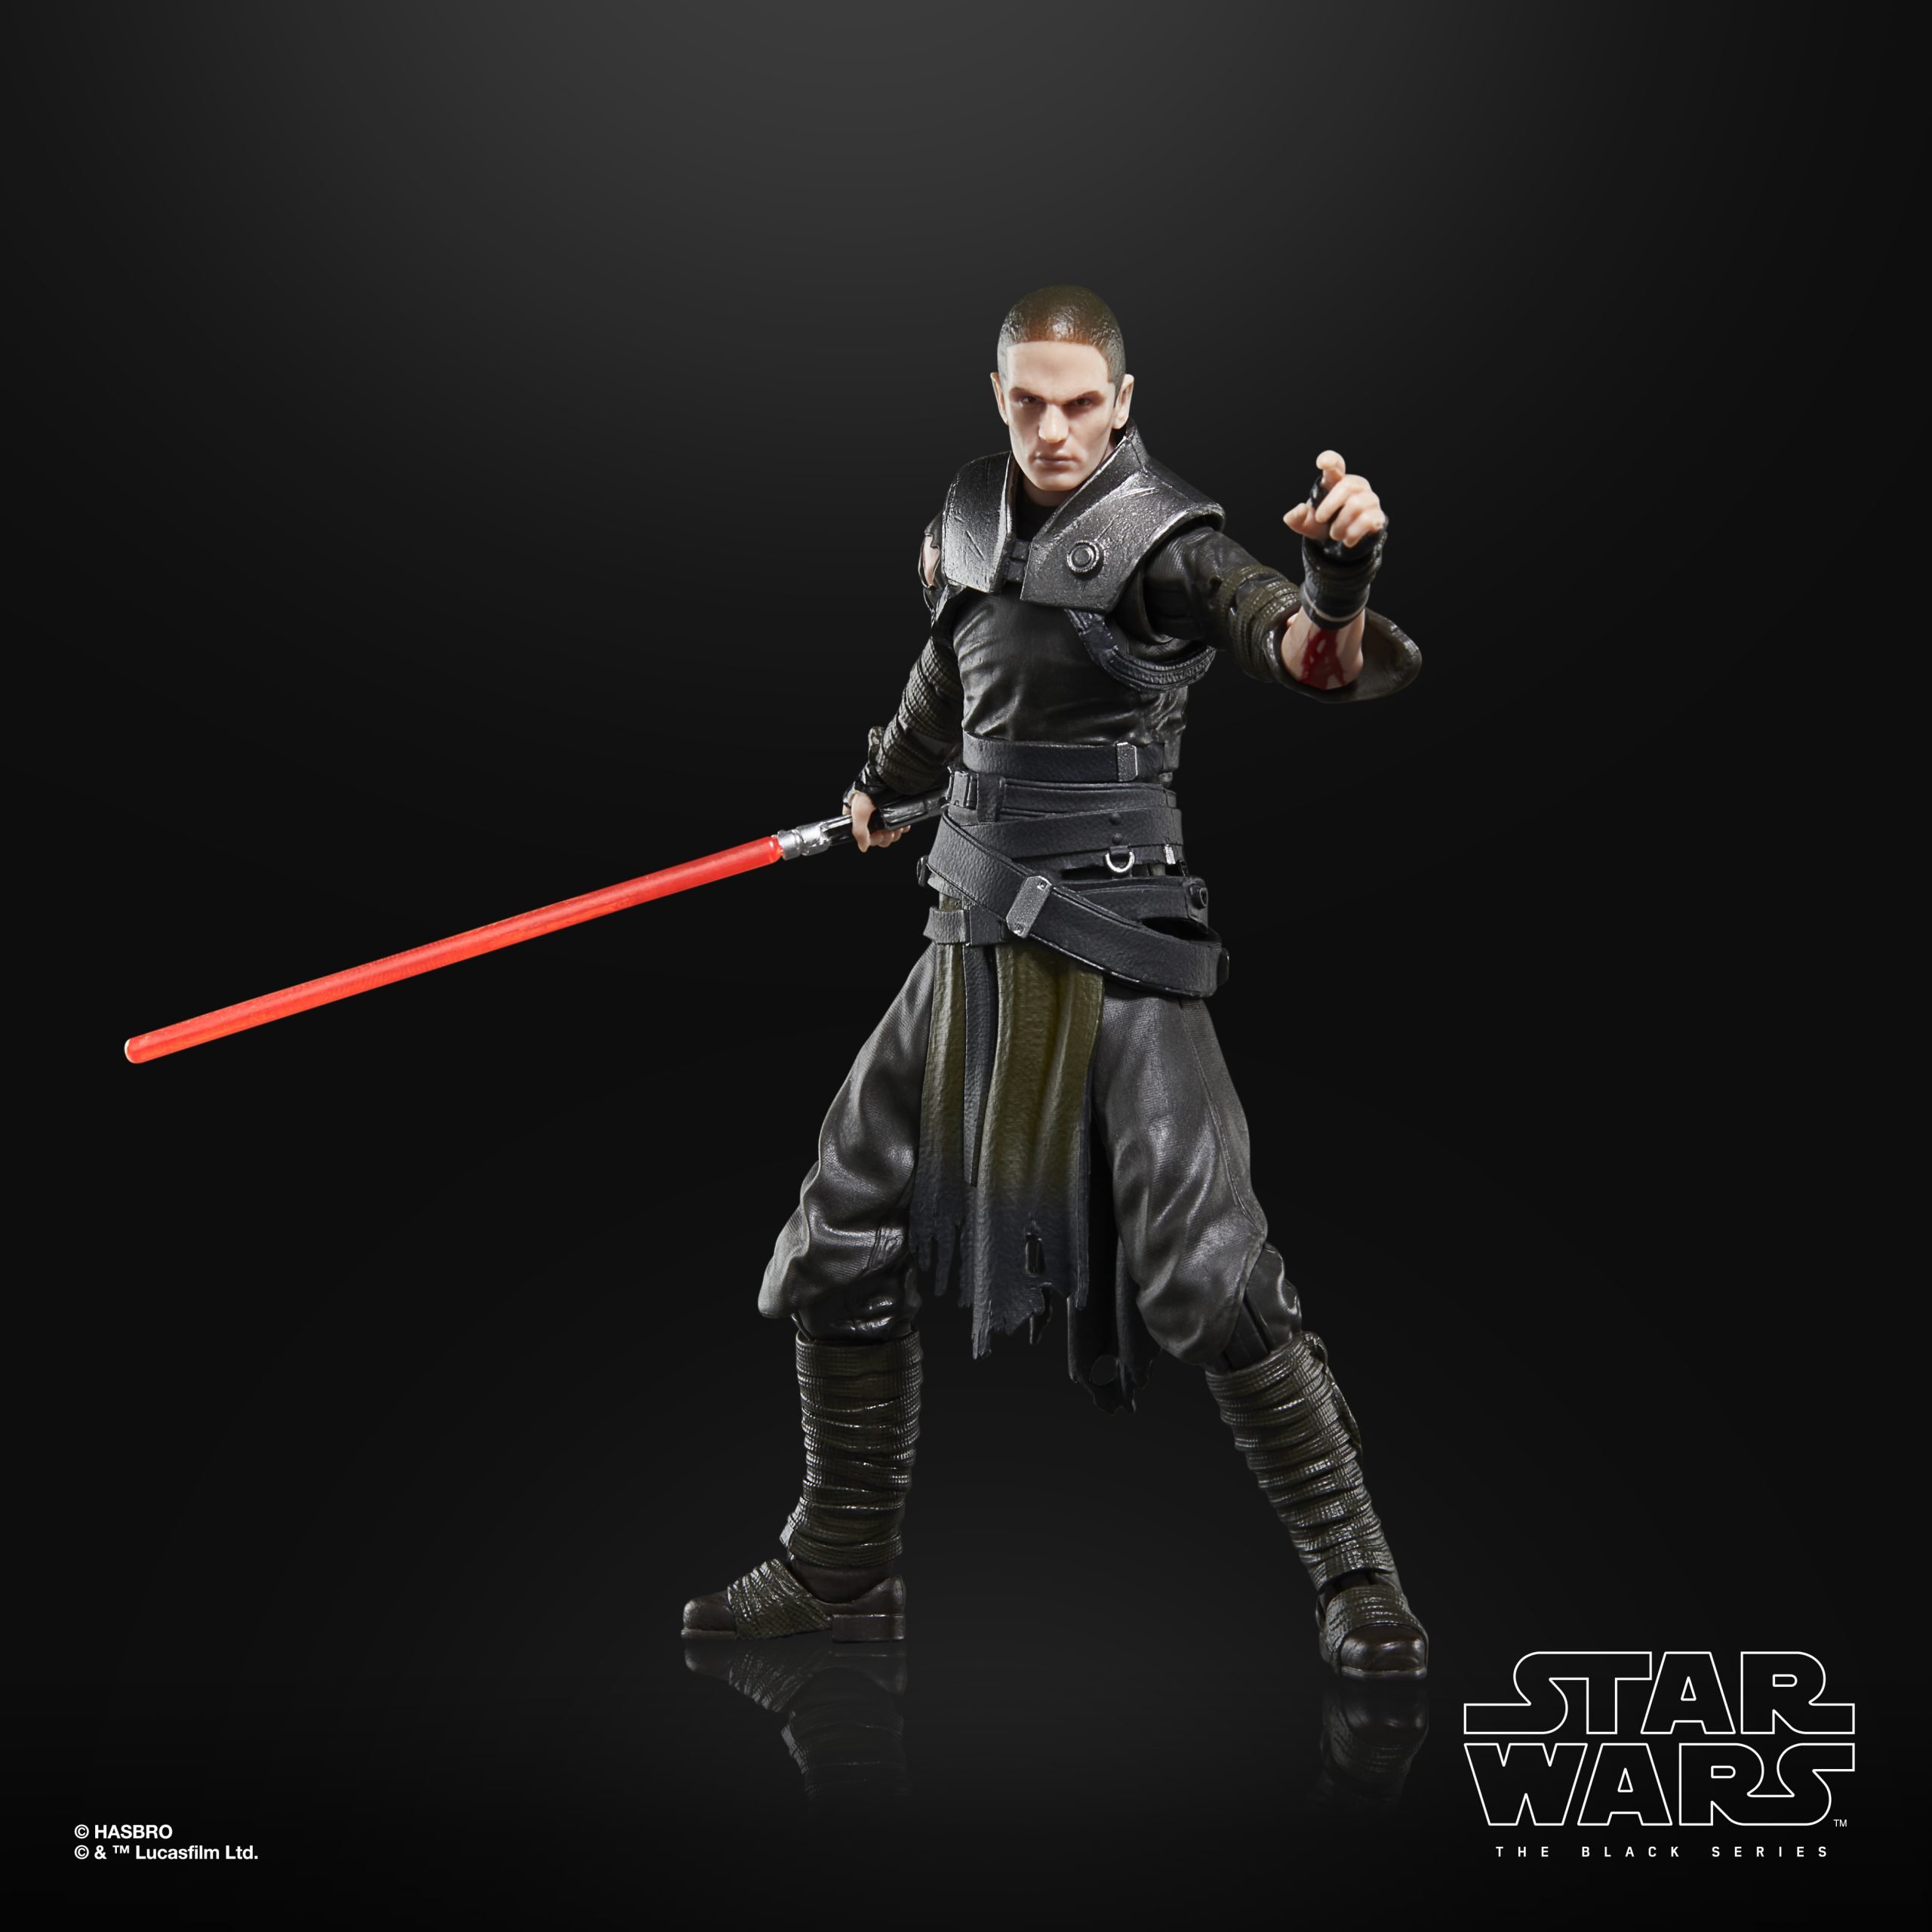 Hasbro Announces New Star Wars Black Series Figures Including New Starkiller Figure Star